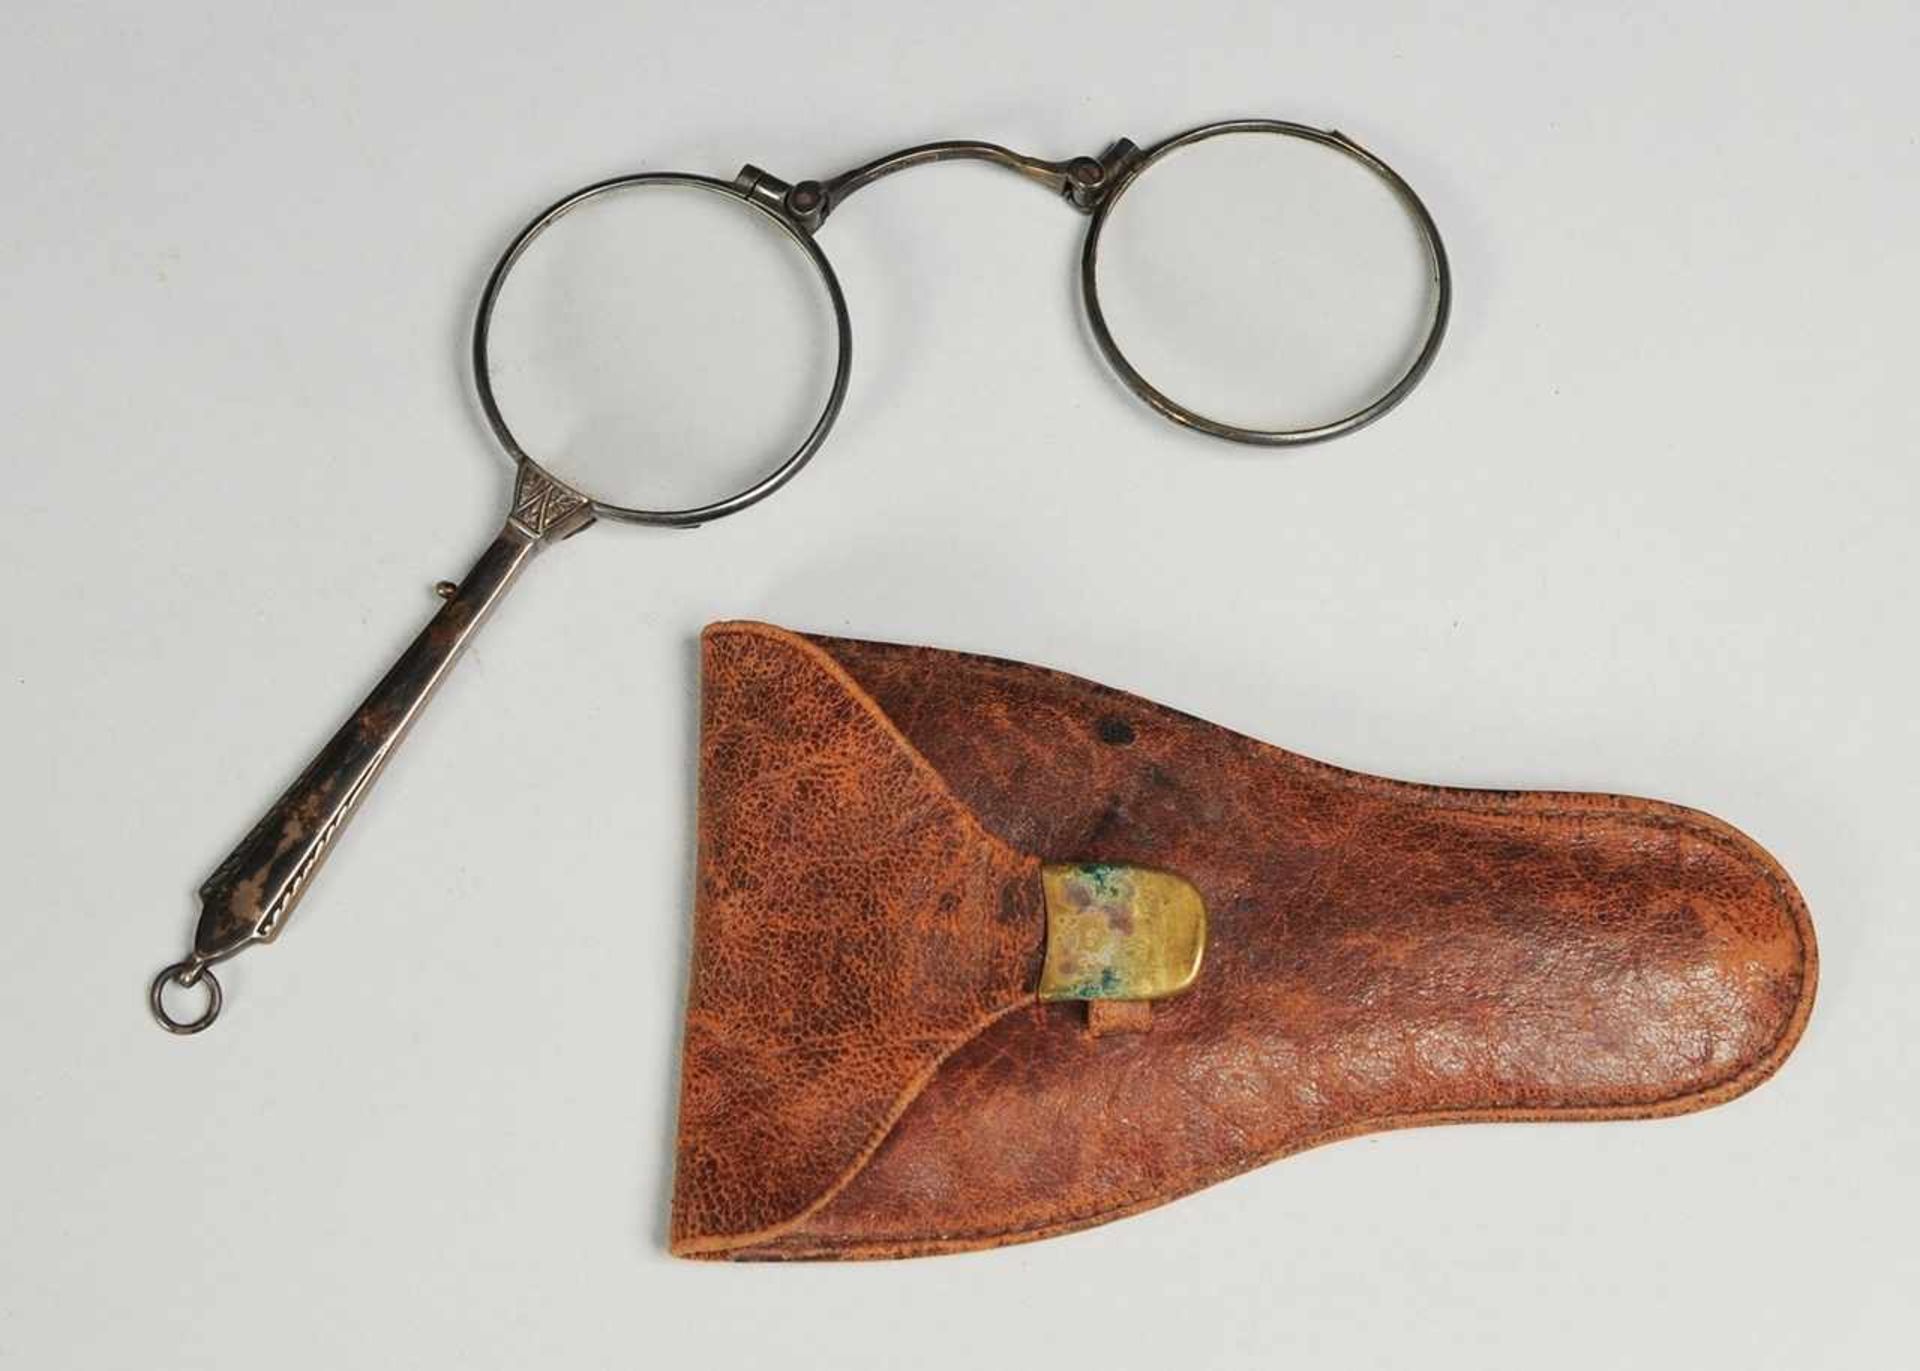 LorgnetteSilber. Klappbrille mit 2 Gläsern. Gest. "900" u. "DRGM". Leder-Etui. Um 1900. H. 10,5 cm.